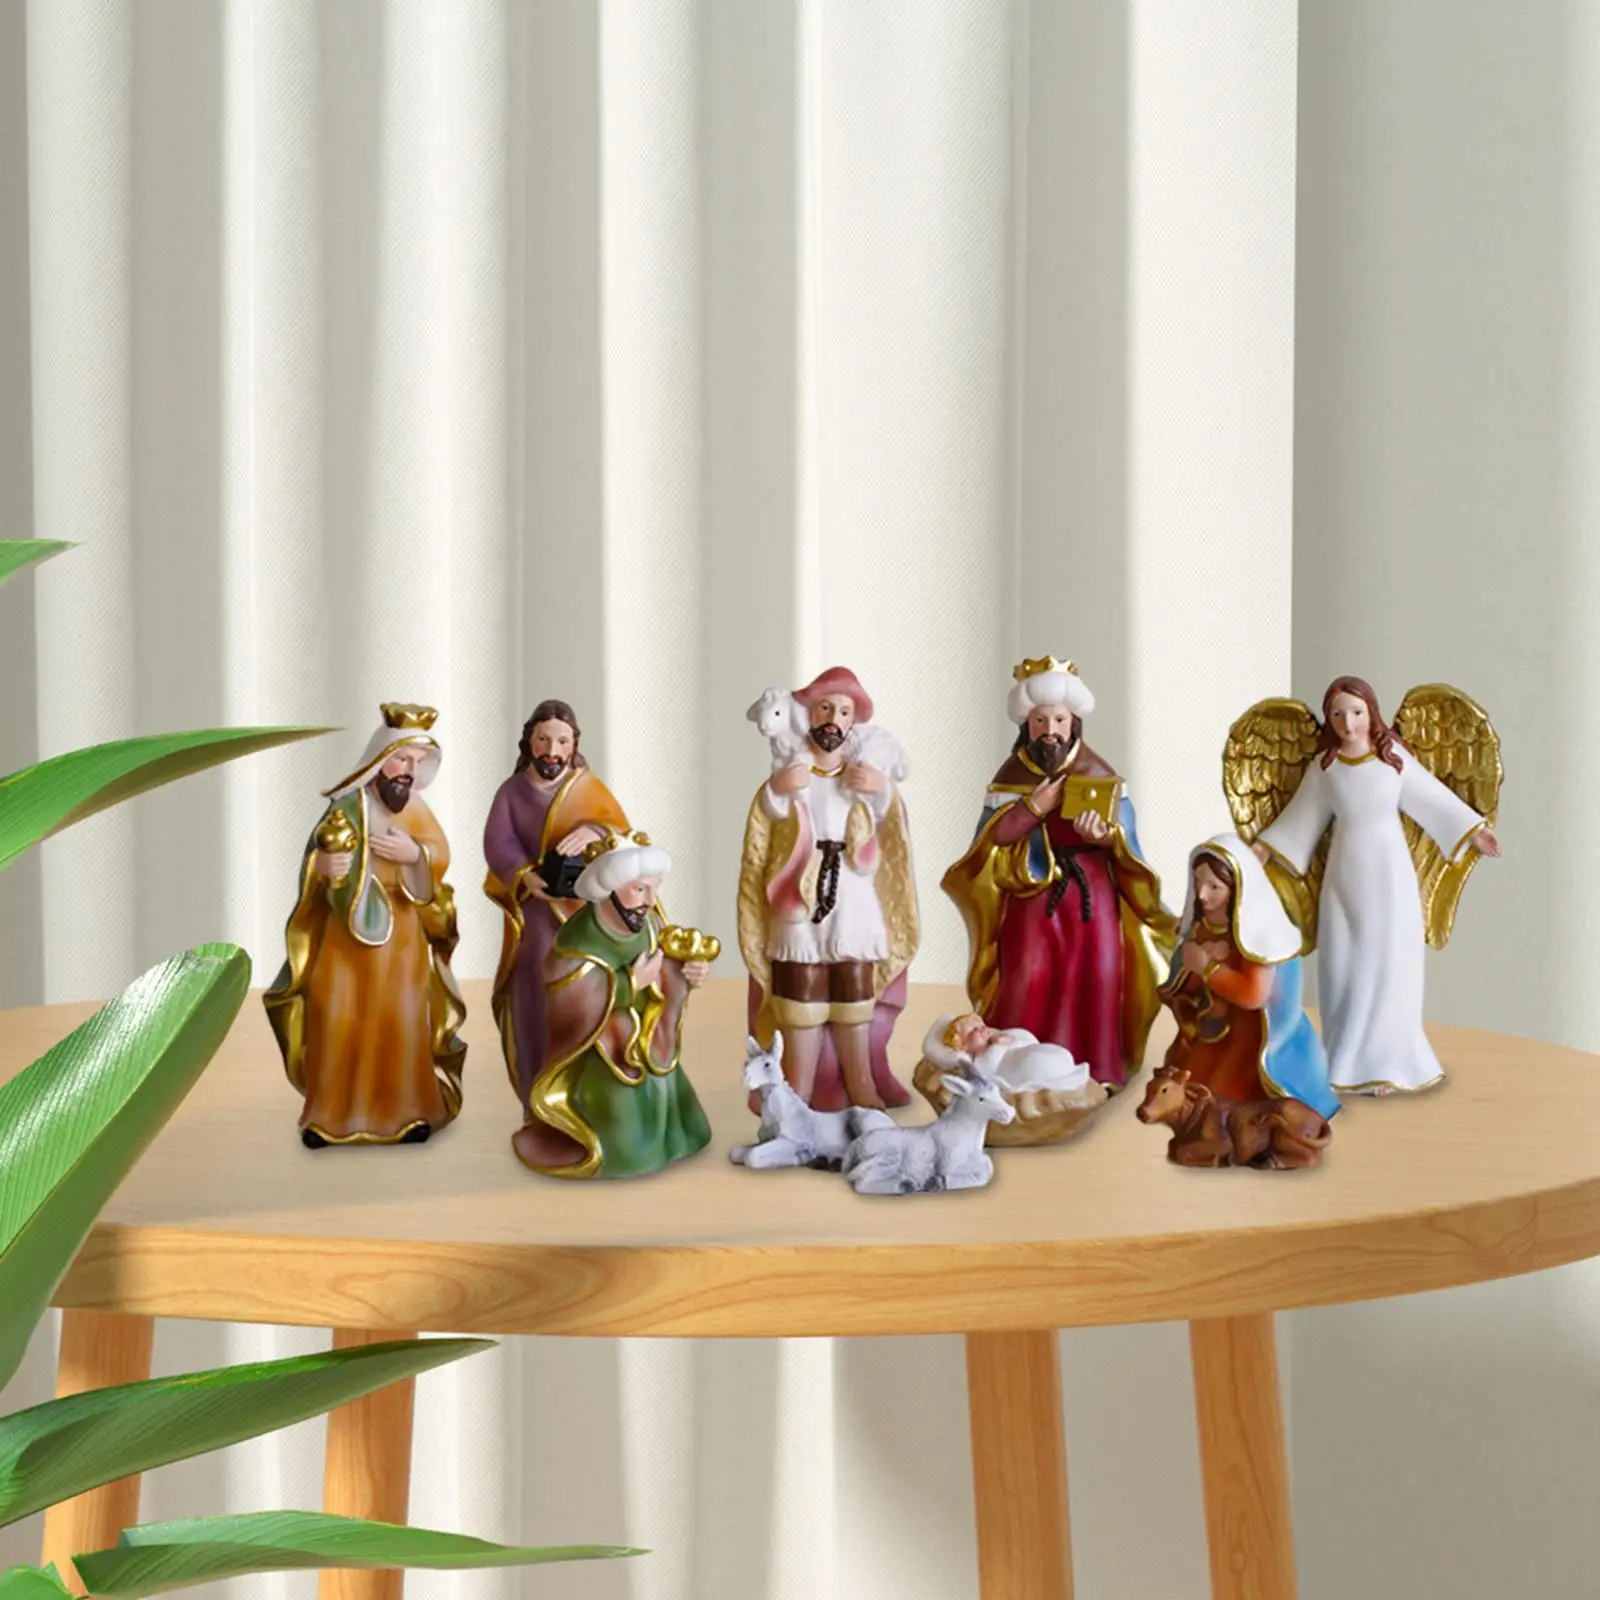 11 Pieces Nativity Figurine Display Set Manger Set for Shelf Tabletop Office